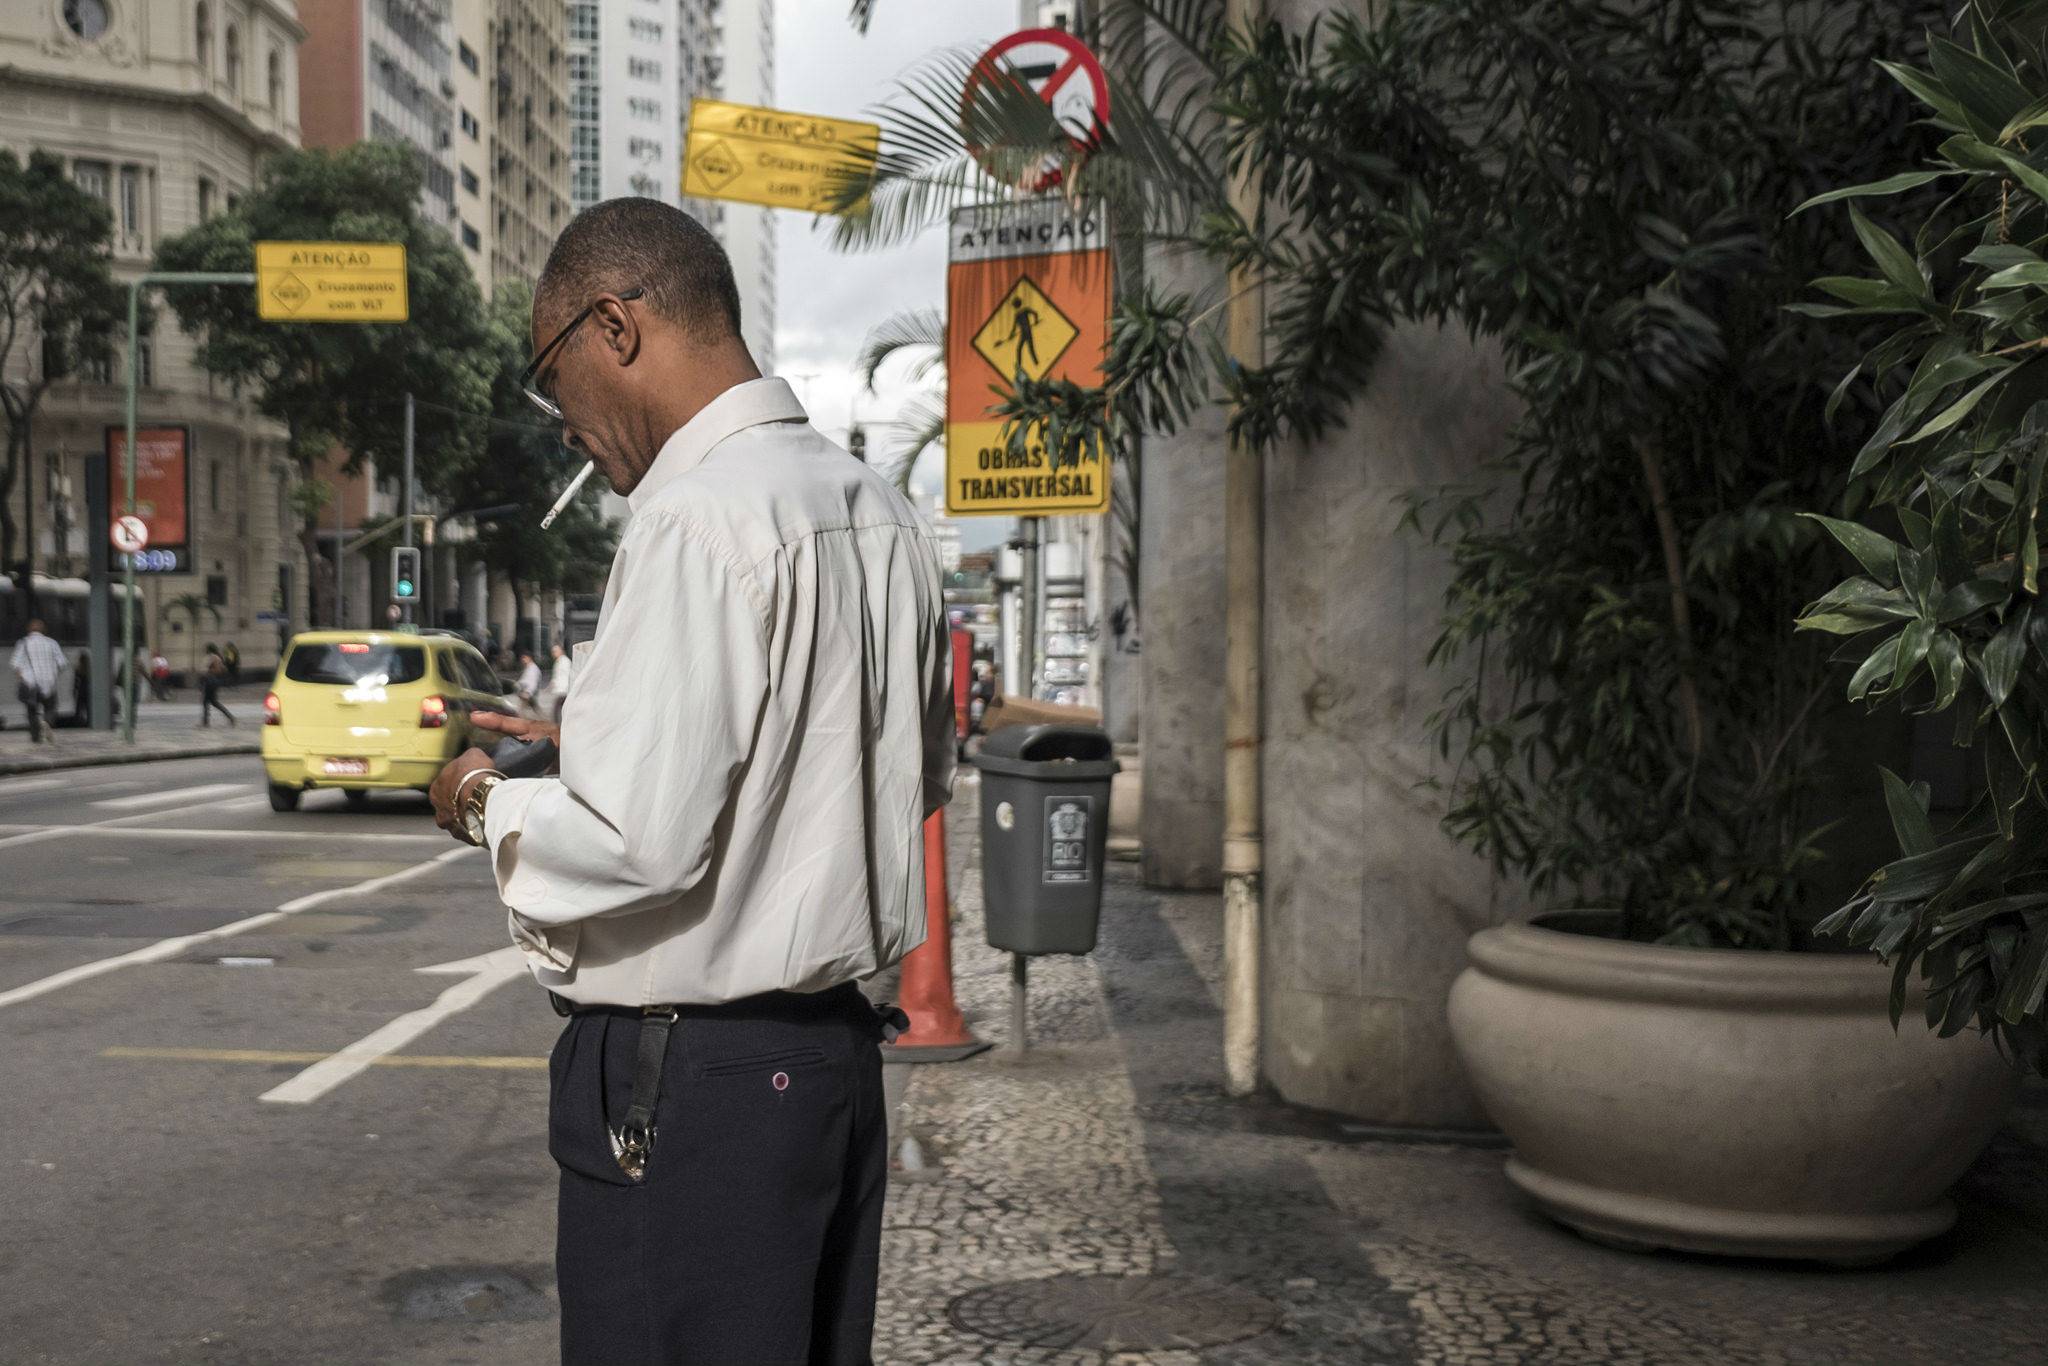 Safety-conscious Brazilians swap cash for credit